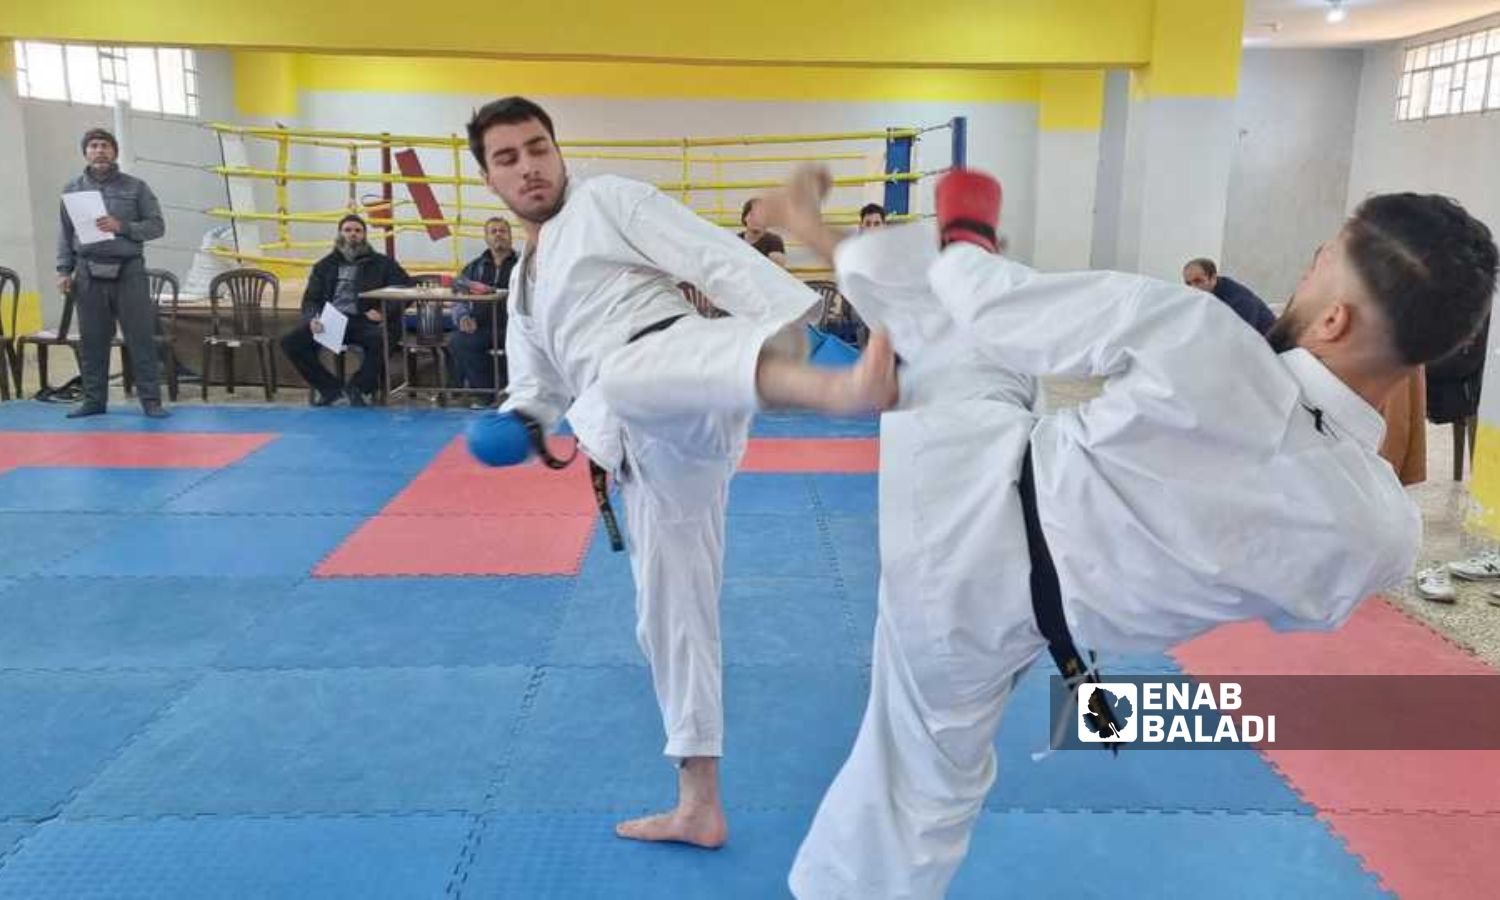 Dan-ranked practitioners in Karate tests in the northwestern Idlib region - November 2023 (Enab Baladi/Anas al-Khouli)